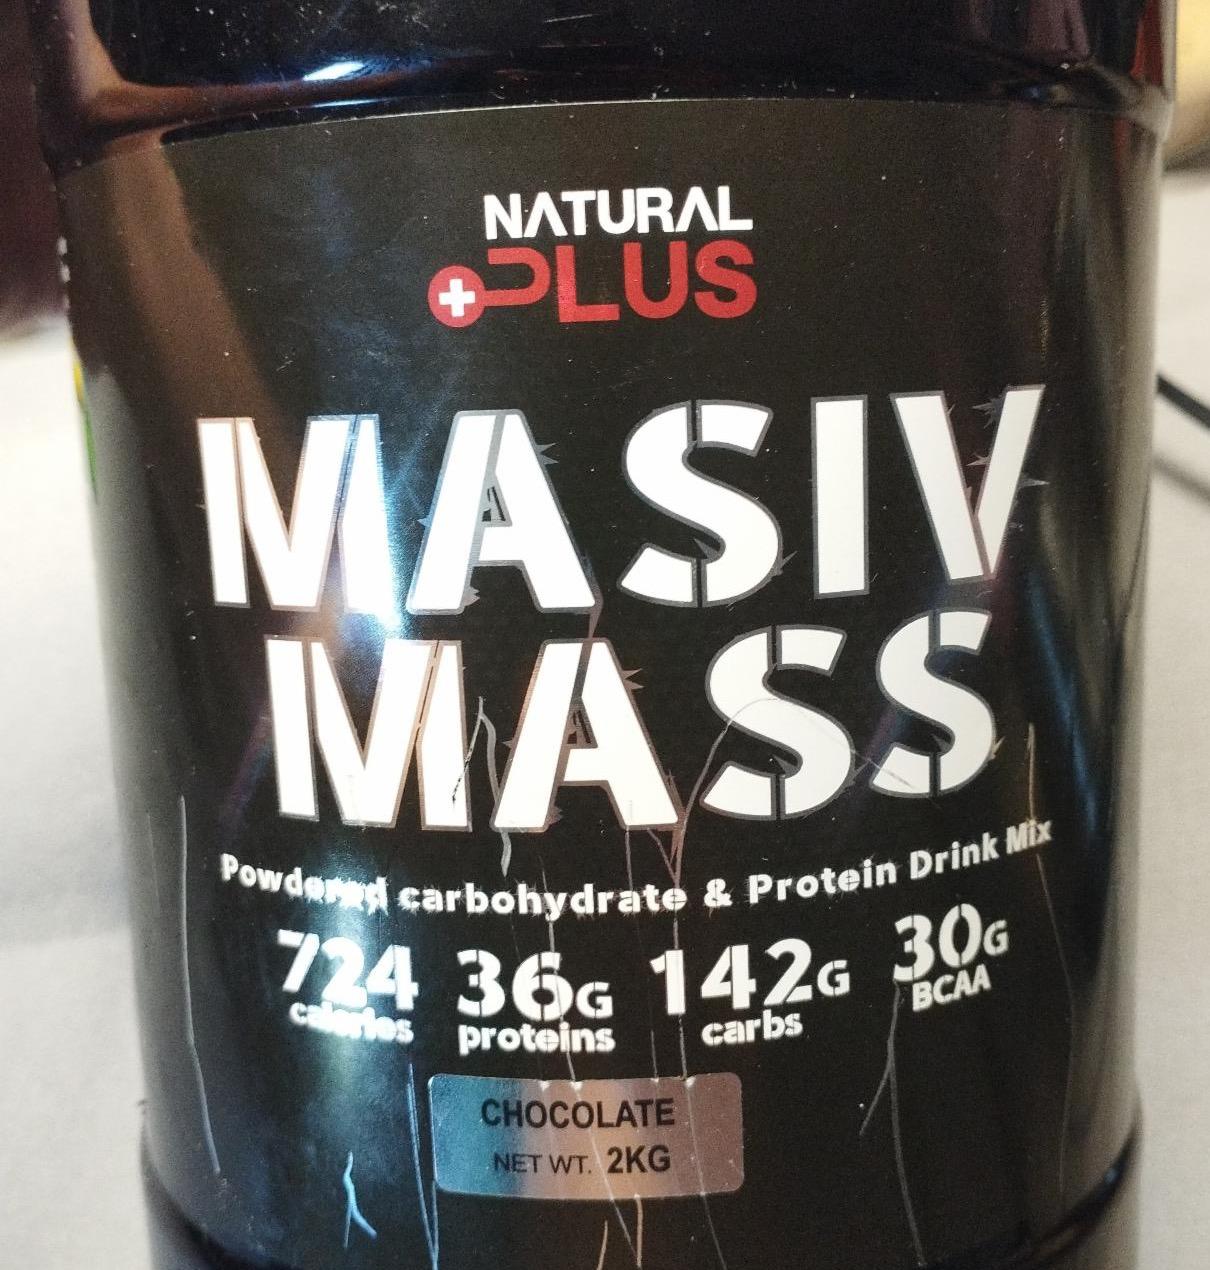 Képek - Masiv Mass Csokis protein Natural plus